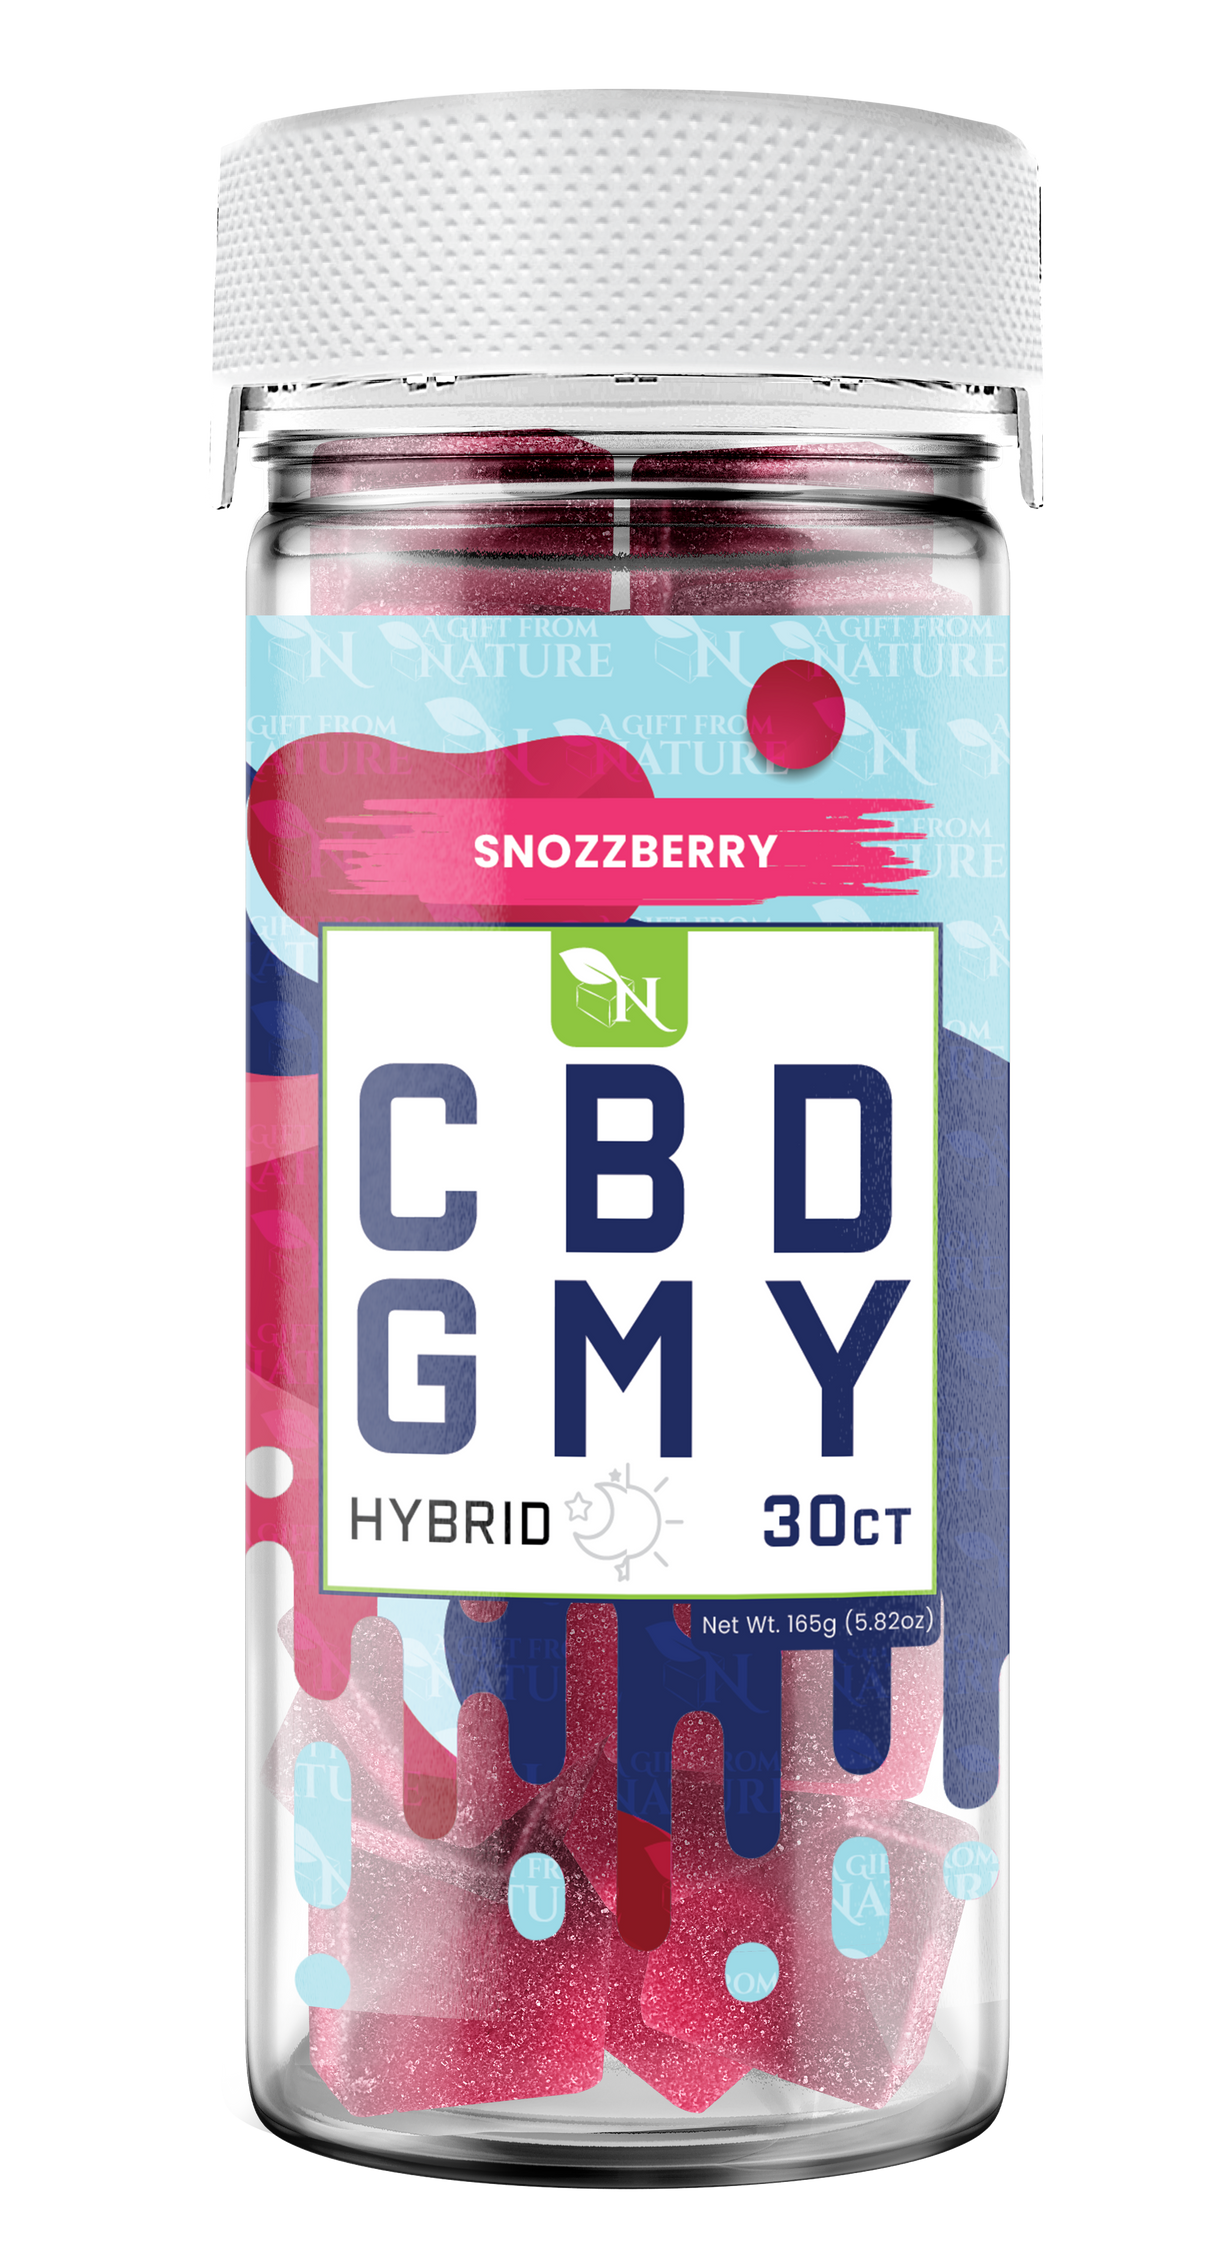 AGFN CBD Gummy: Snozzberry Hybrid (1500MG)